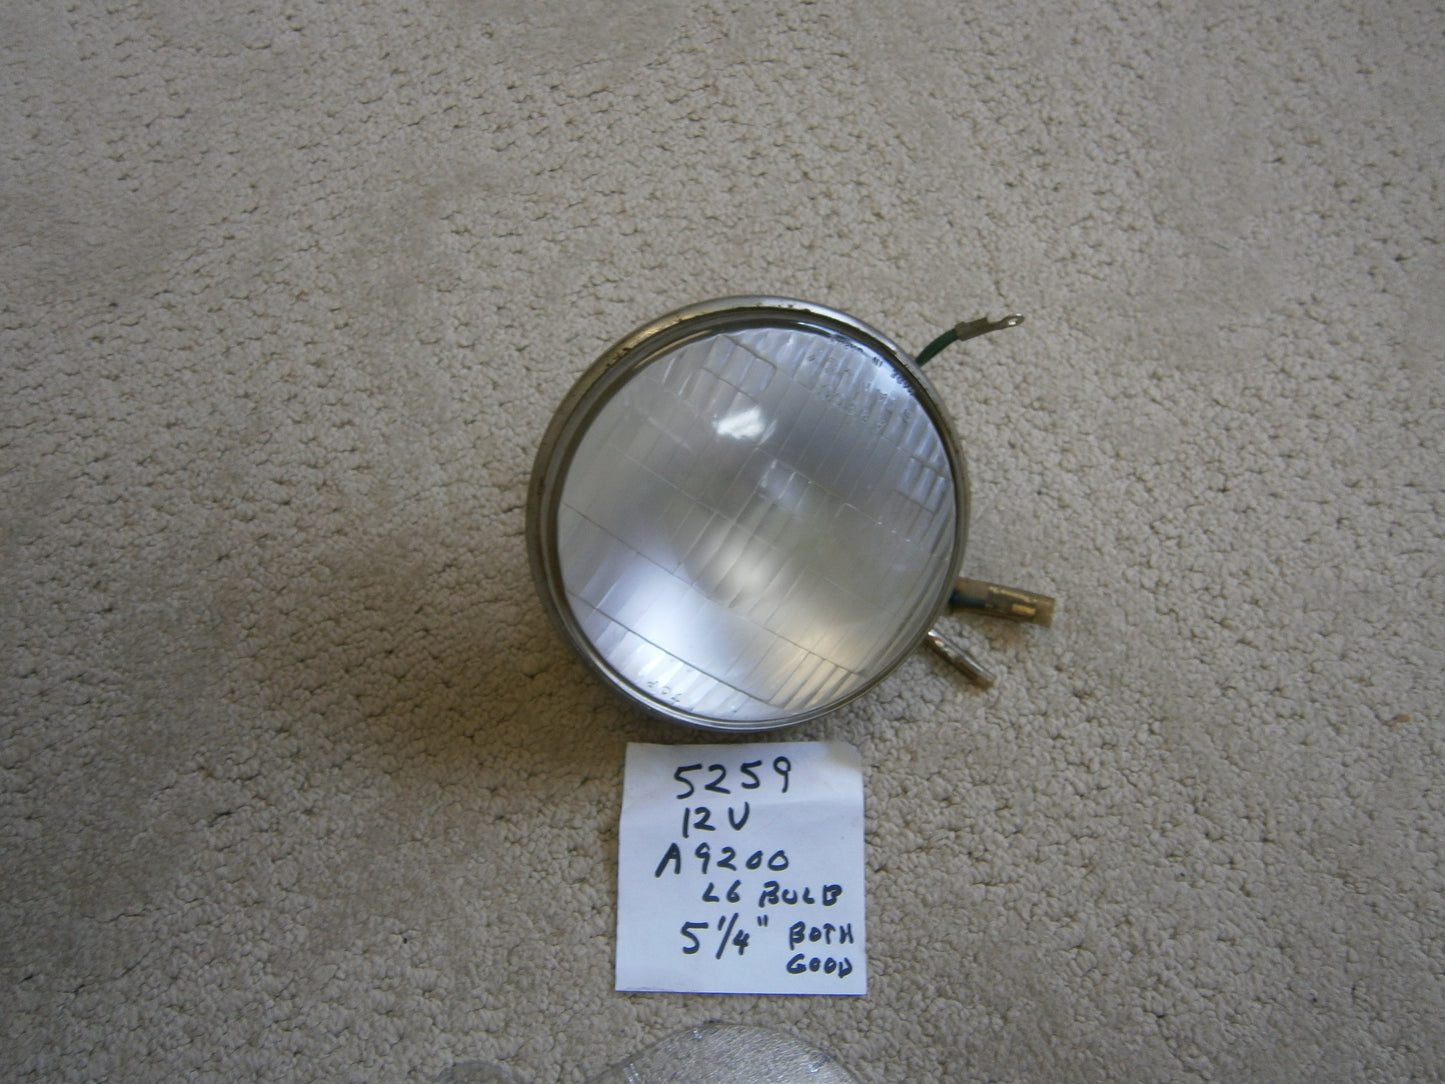 Honda 12 volt headlight bulb sku 5259